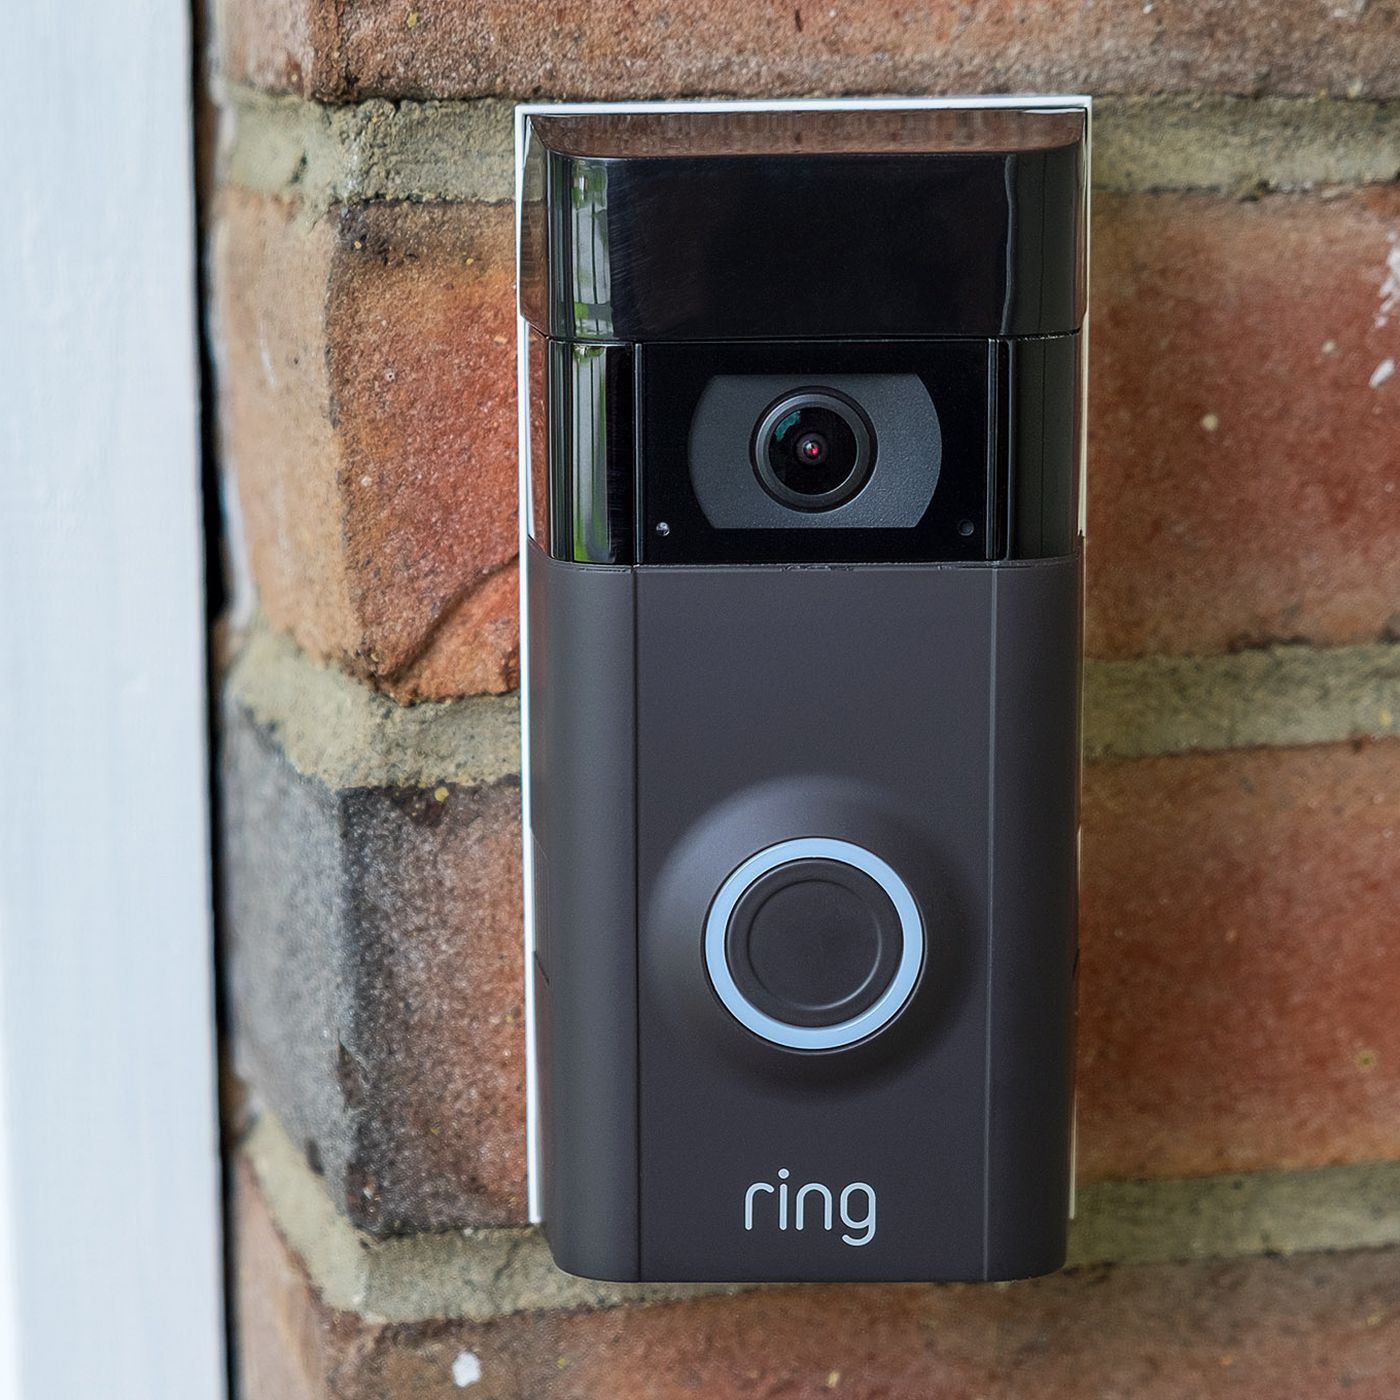 Black ring camera on a brick wall